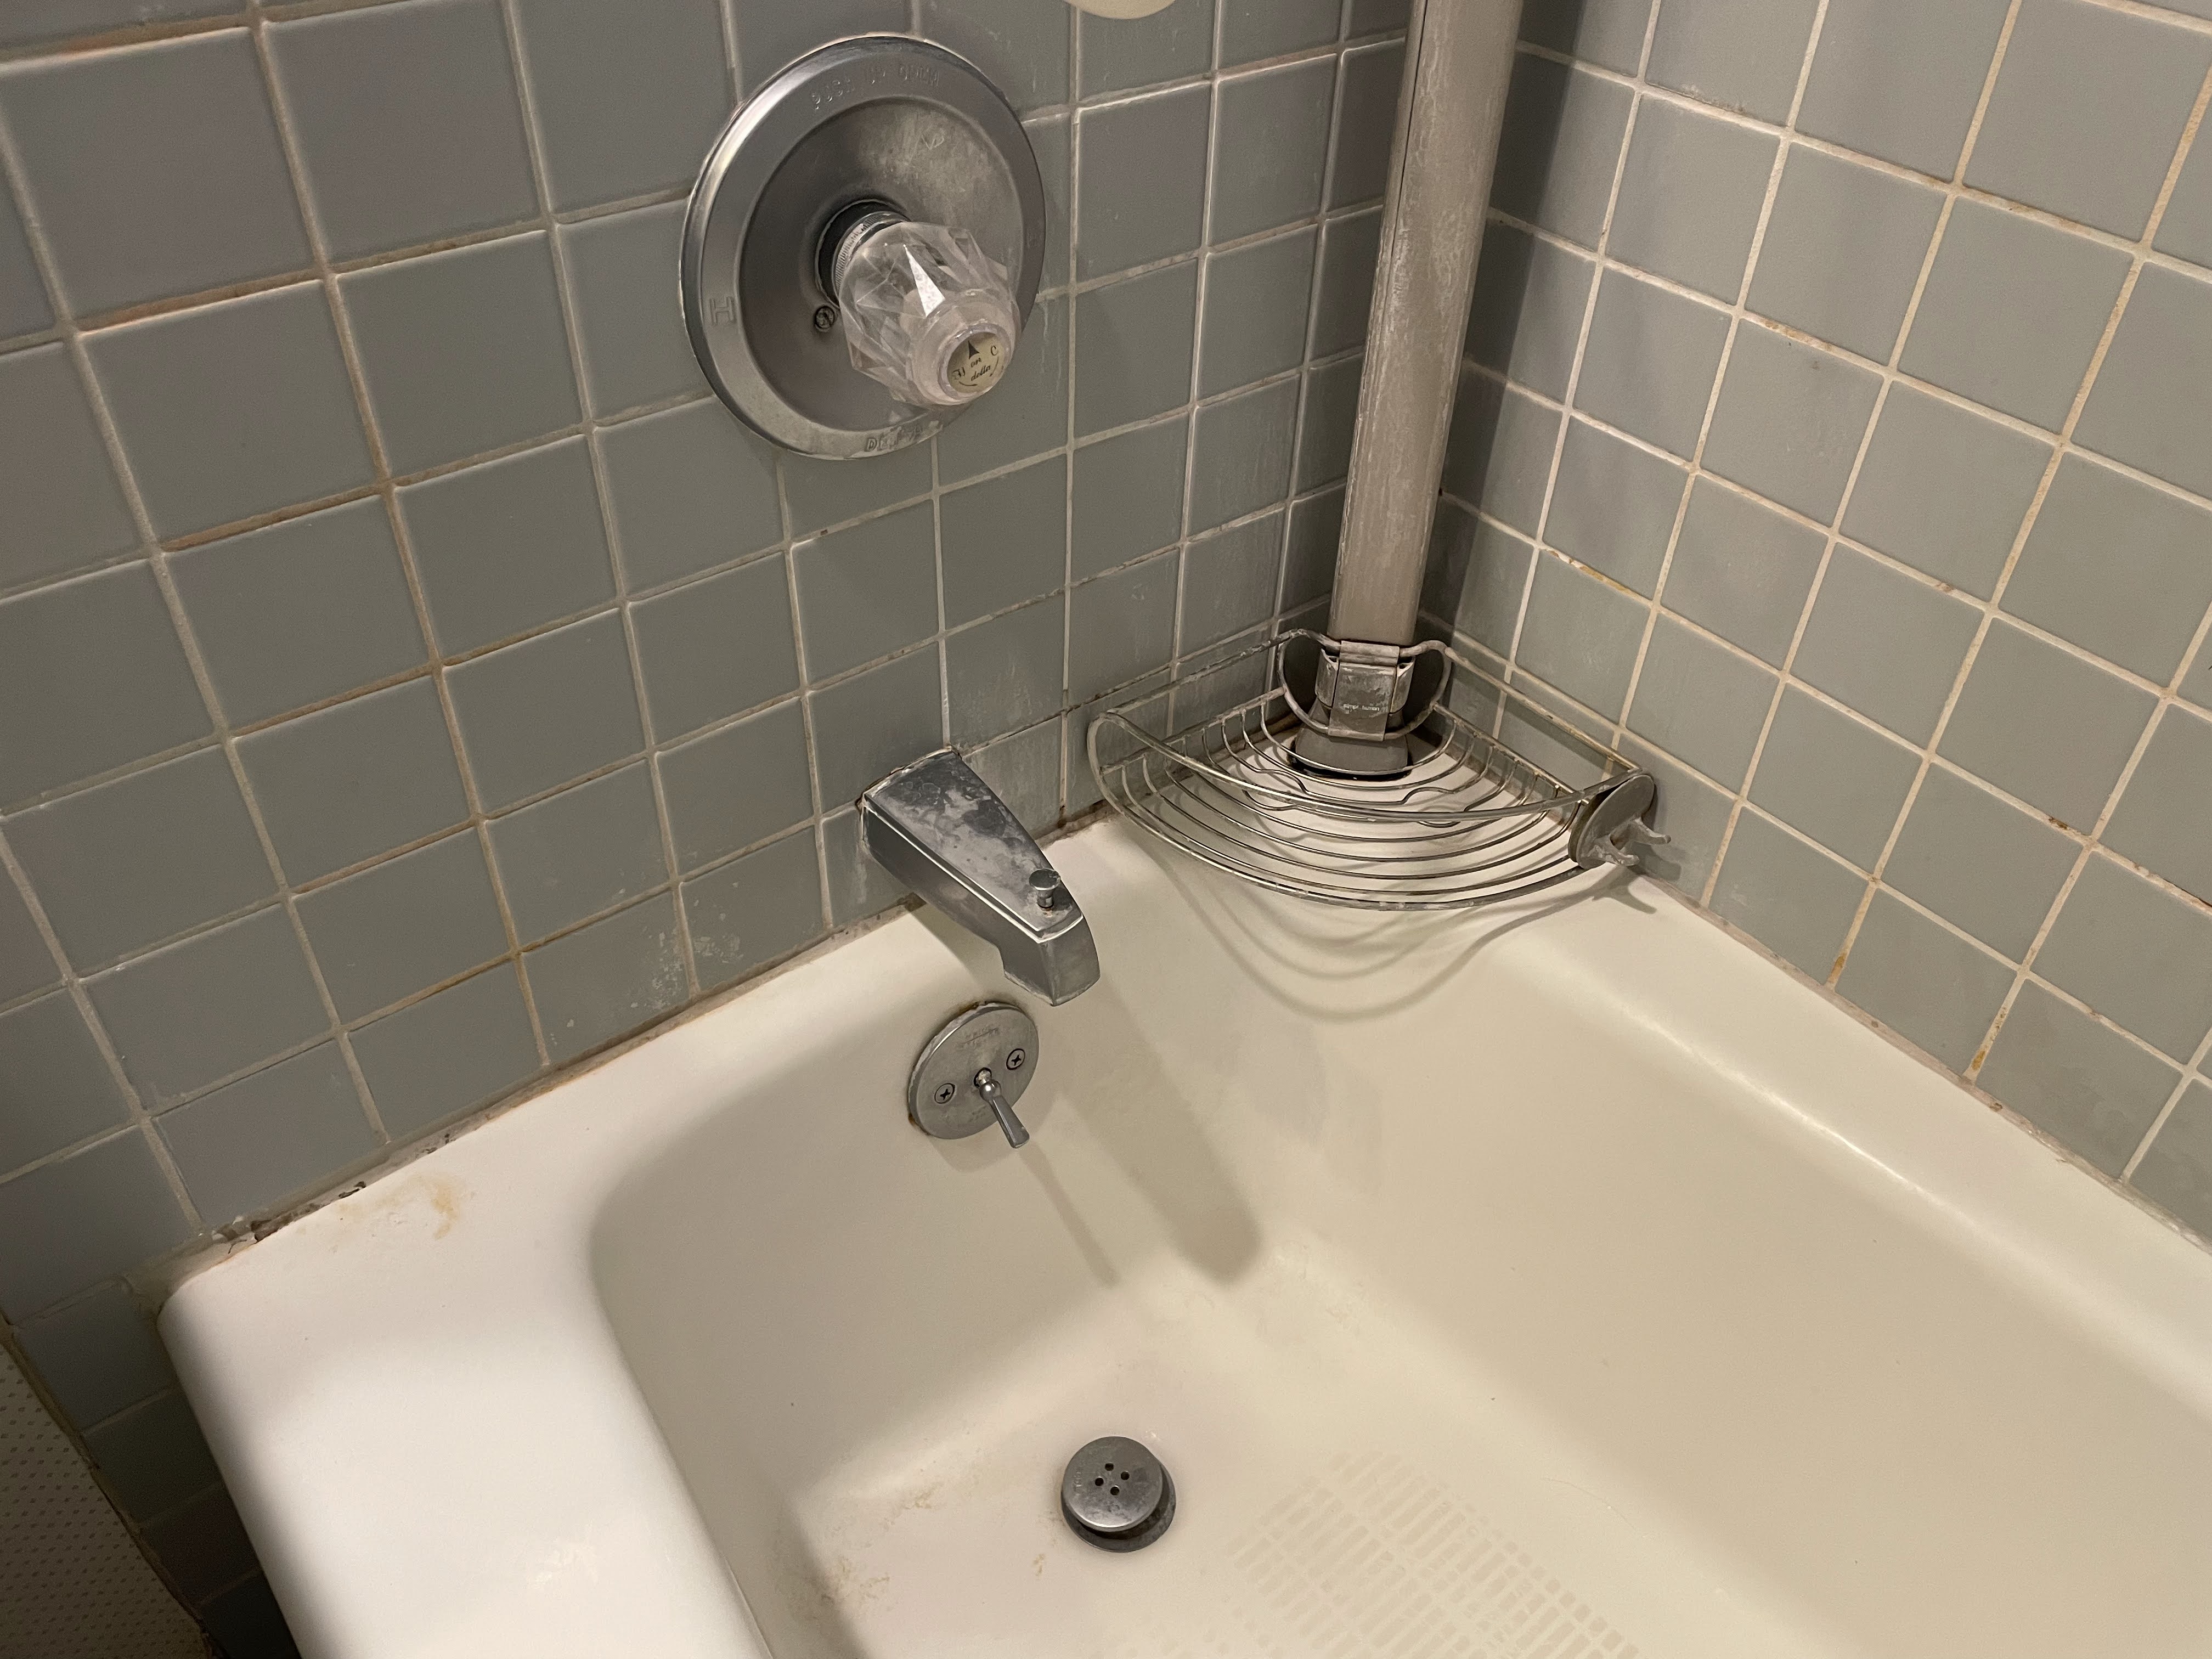 How to snake Geberit Bathtub drain?  Terry Love Plumbing Advice & Remodel  DIY & Professional Forum